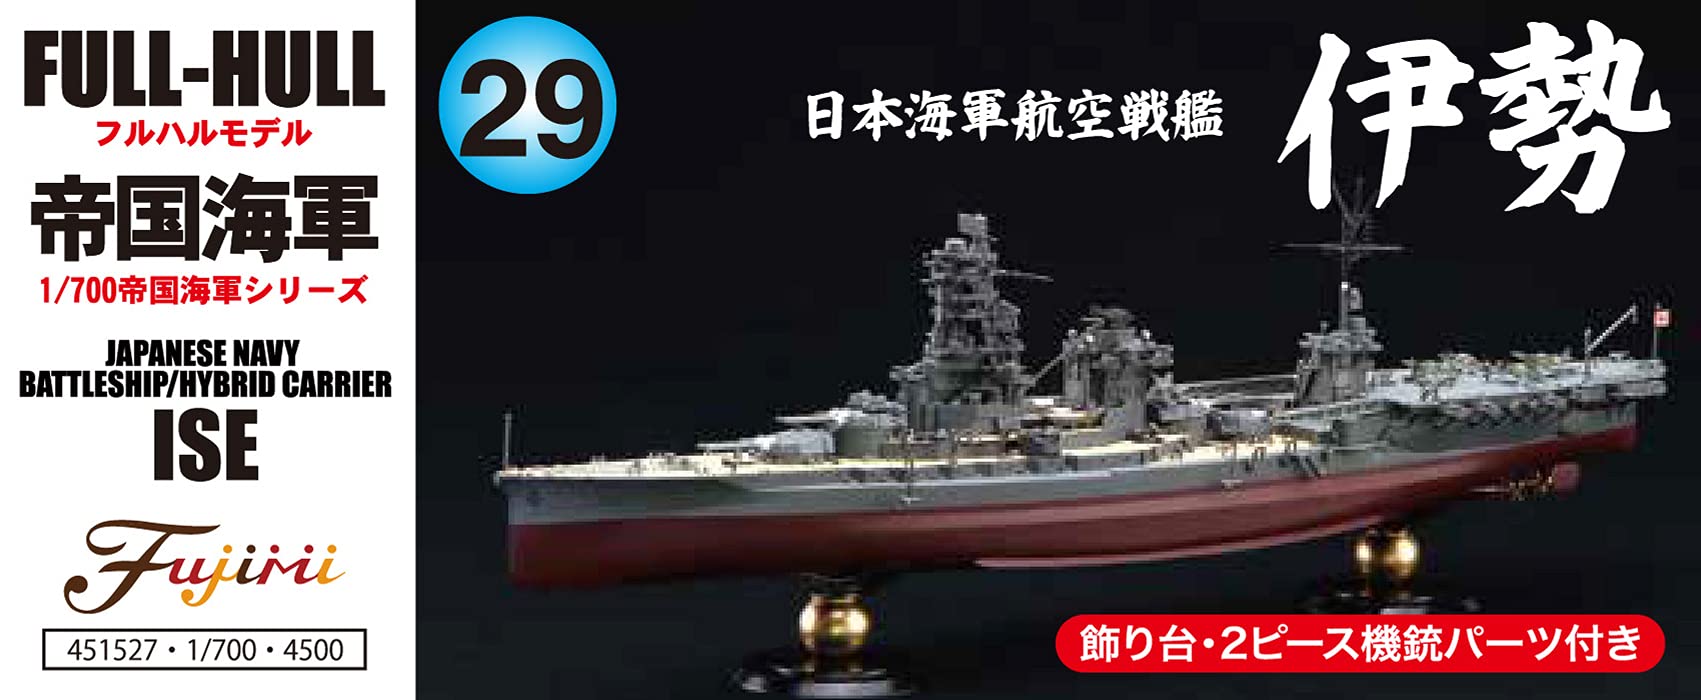 Fujimi Model 1/700 Imperial Navy Series No.29 Japanese Navy Aviation Battleship Ise Full Hull Model Fh-29